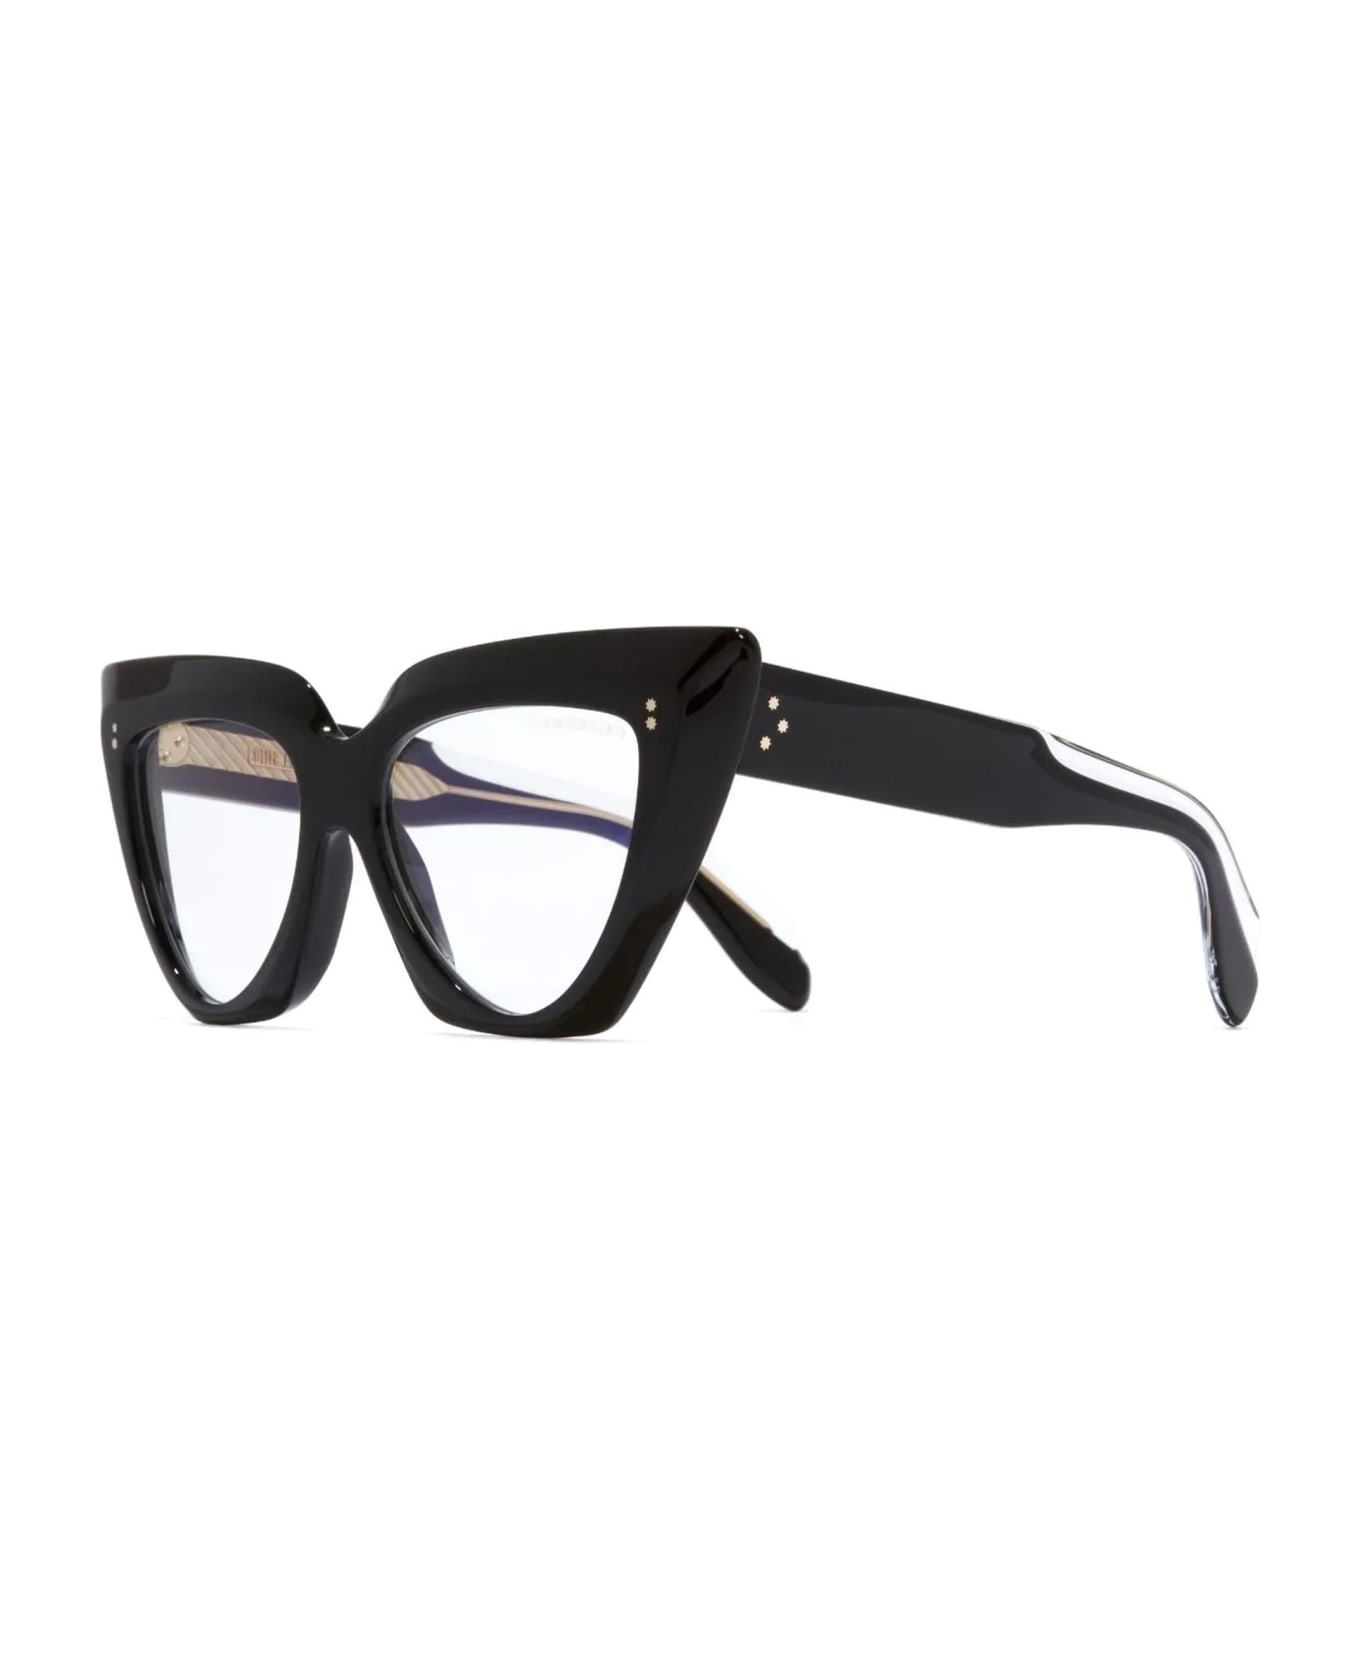 Cutler and Gross 1407 / Black Rx Glasses - Black